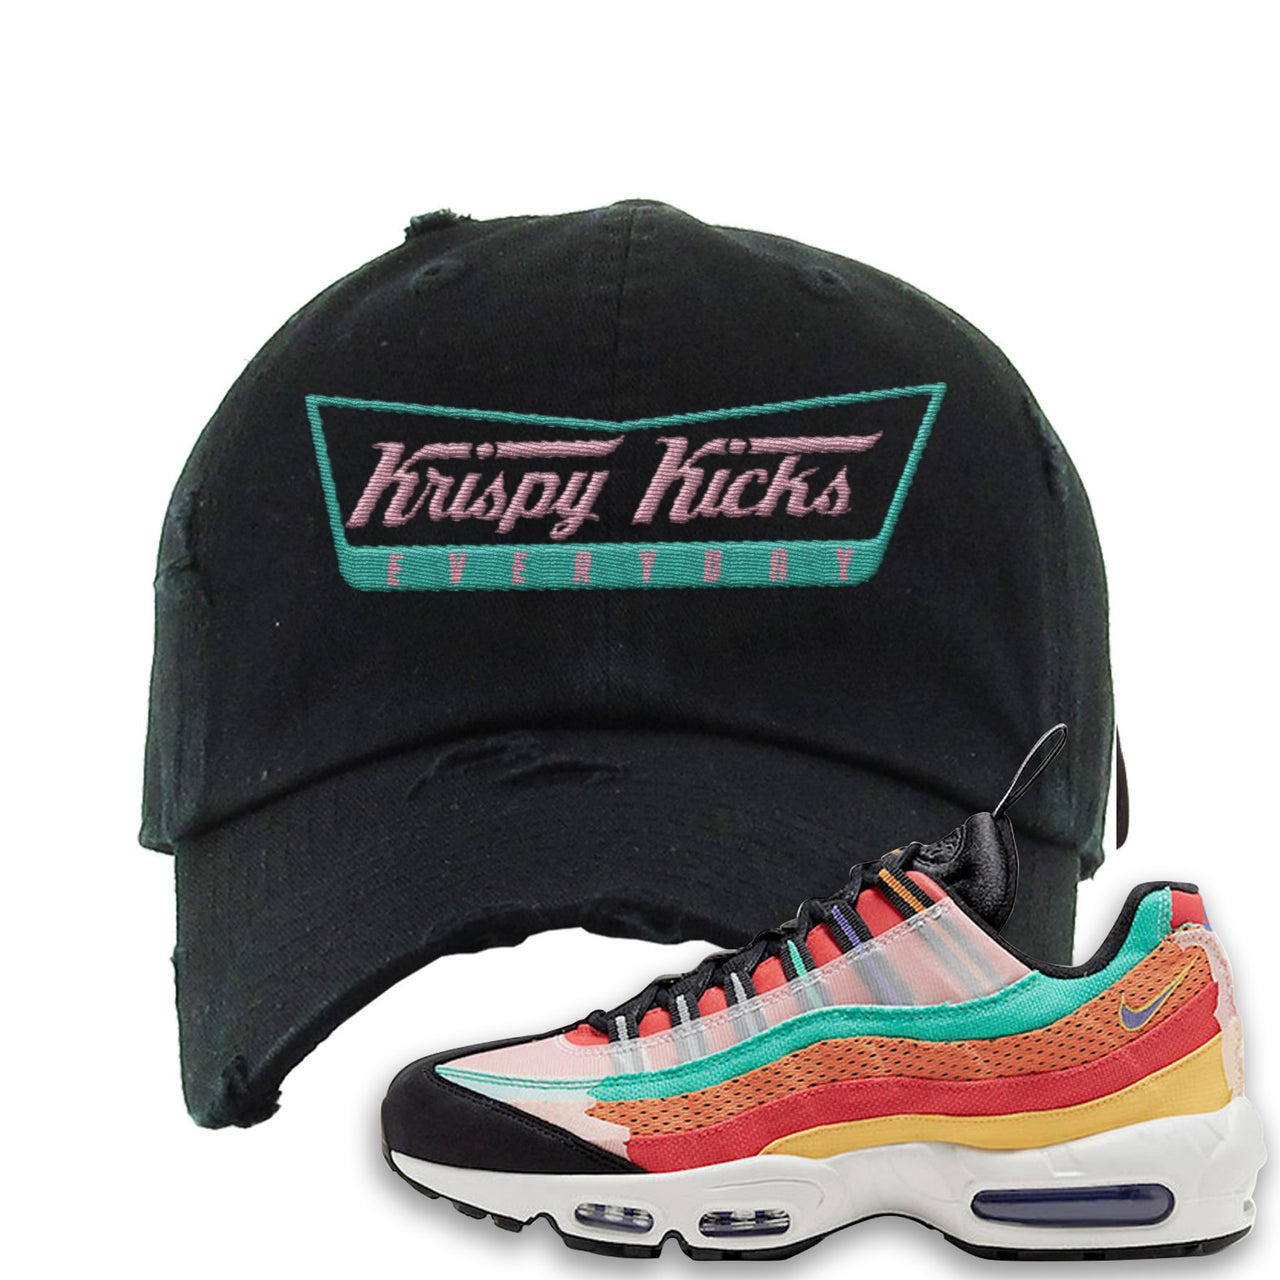 Air Max 95 Black History Month Sneaker Black Distressed Dad Hat | Hat to match Air Max 95 Black History Month Shoes | Krispy Kicks